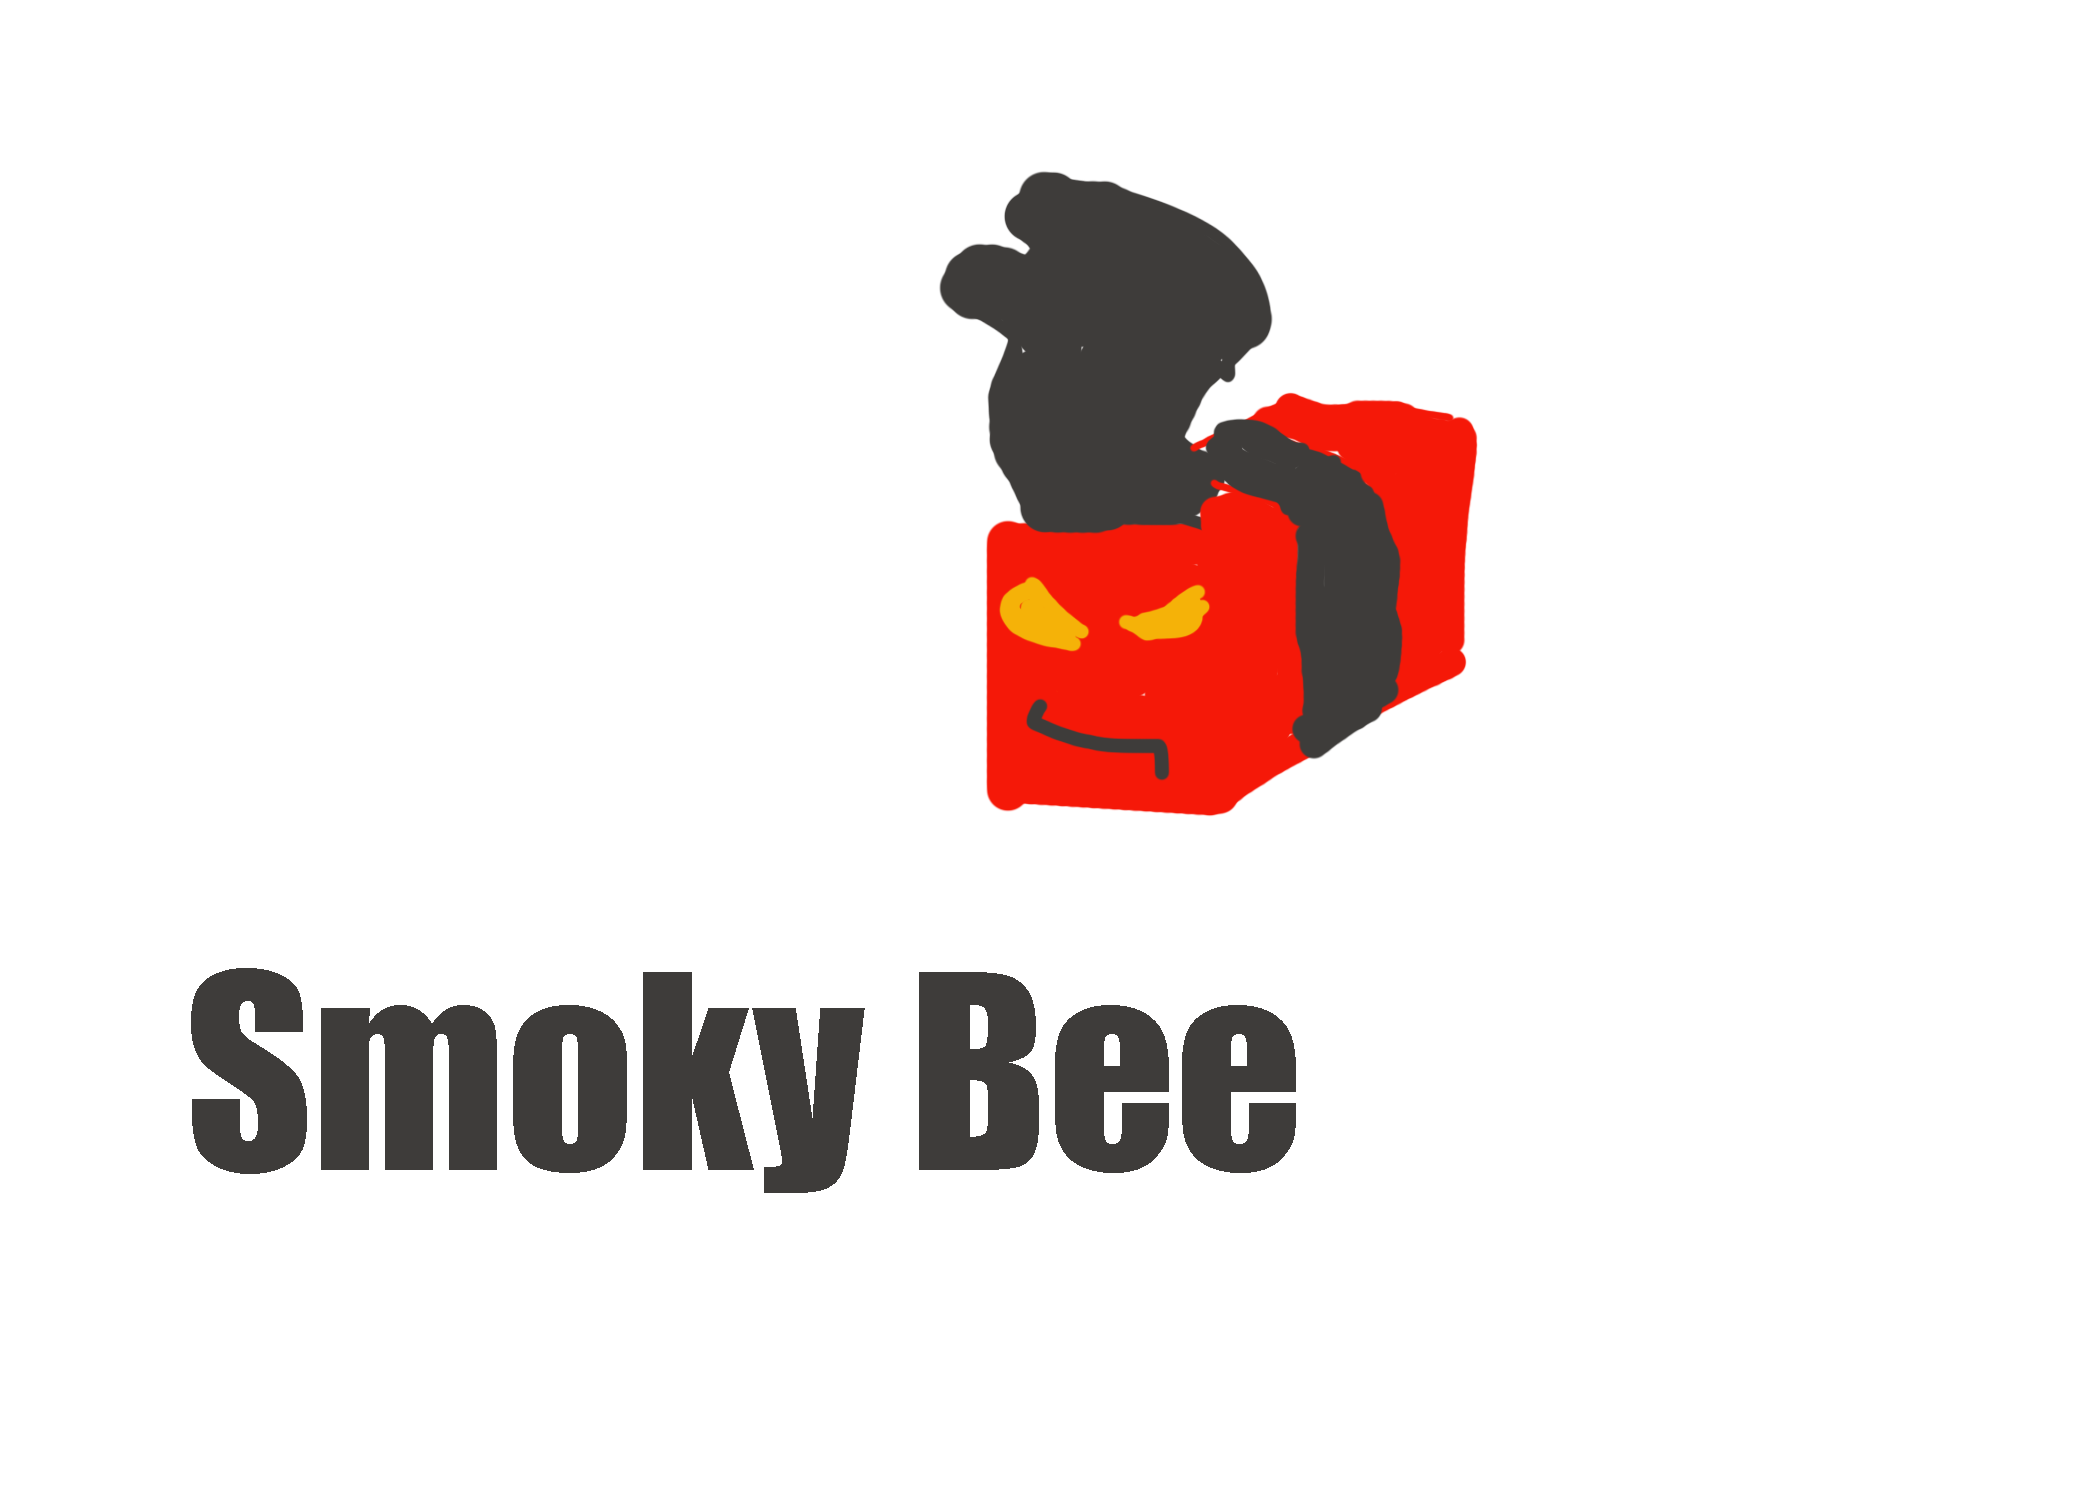 Category talk:Blog posts, Bee Swarm Simulator Wiki